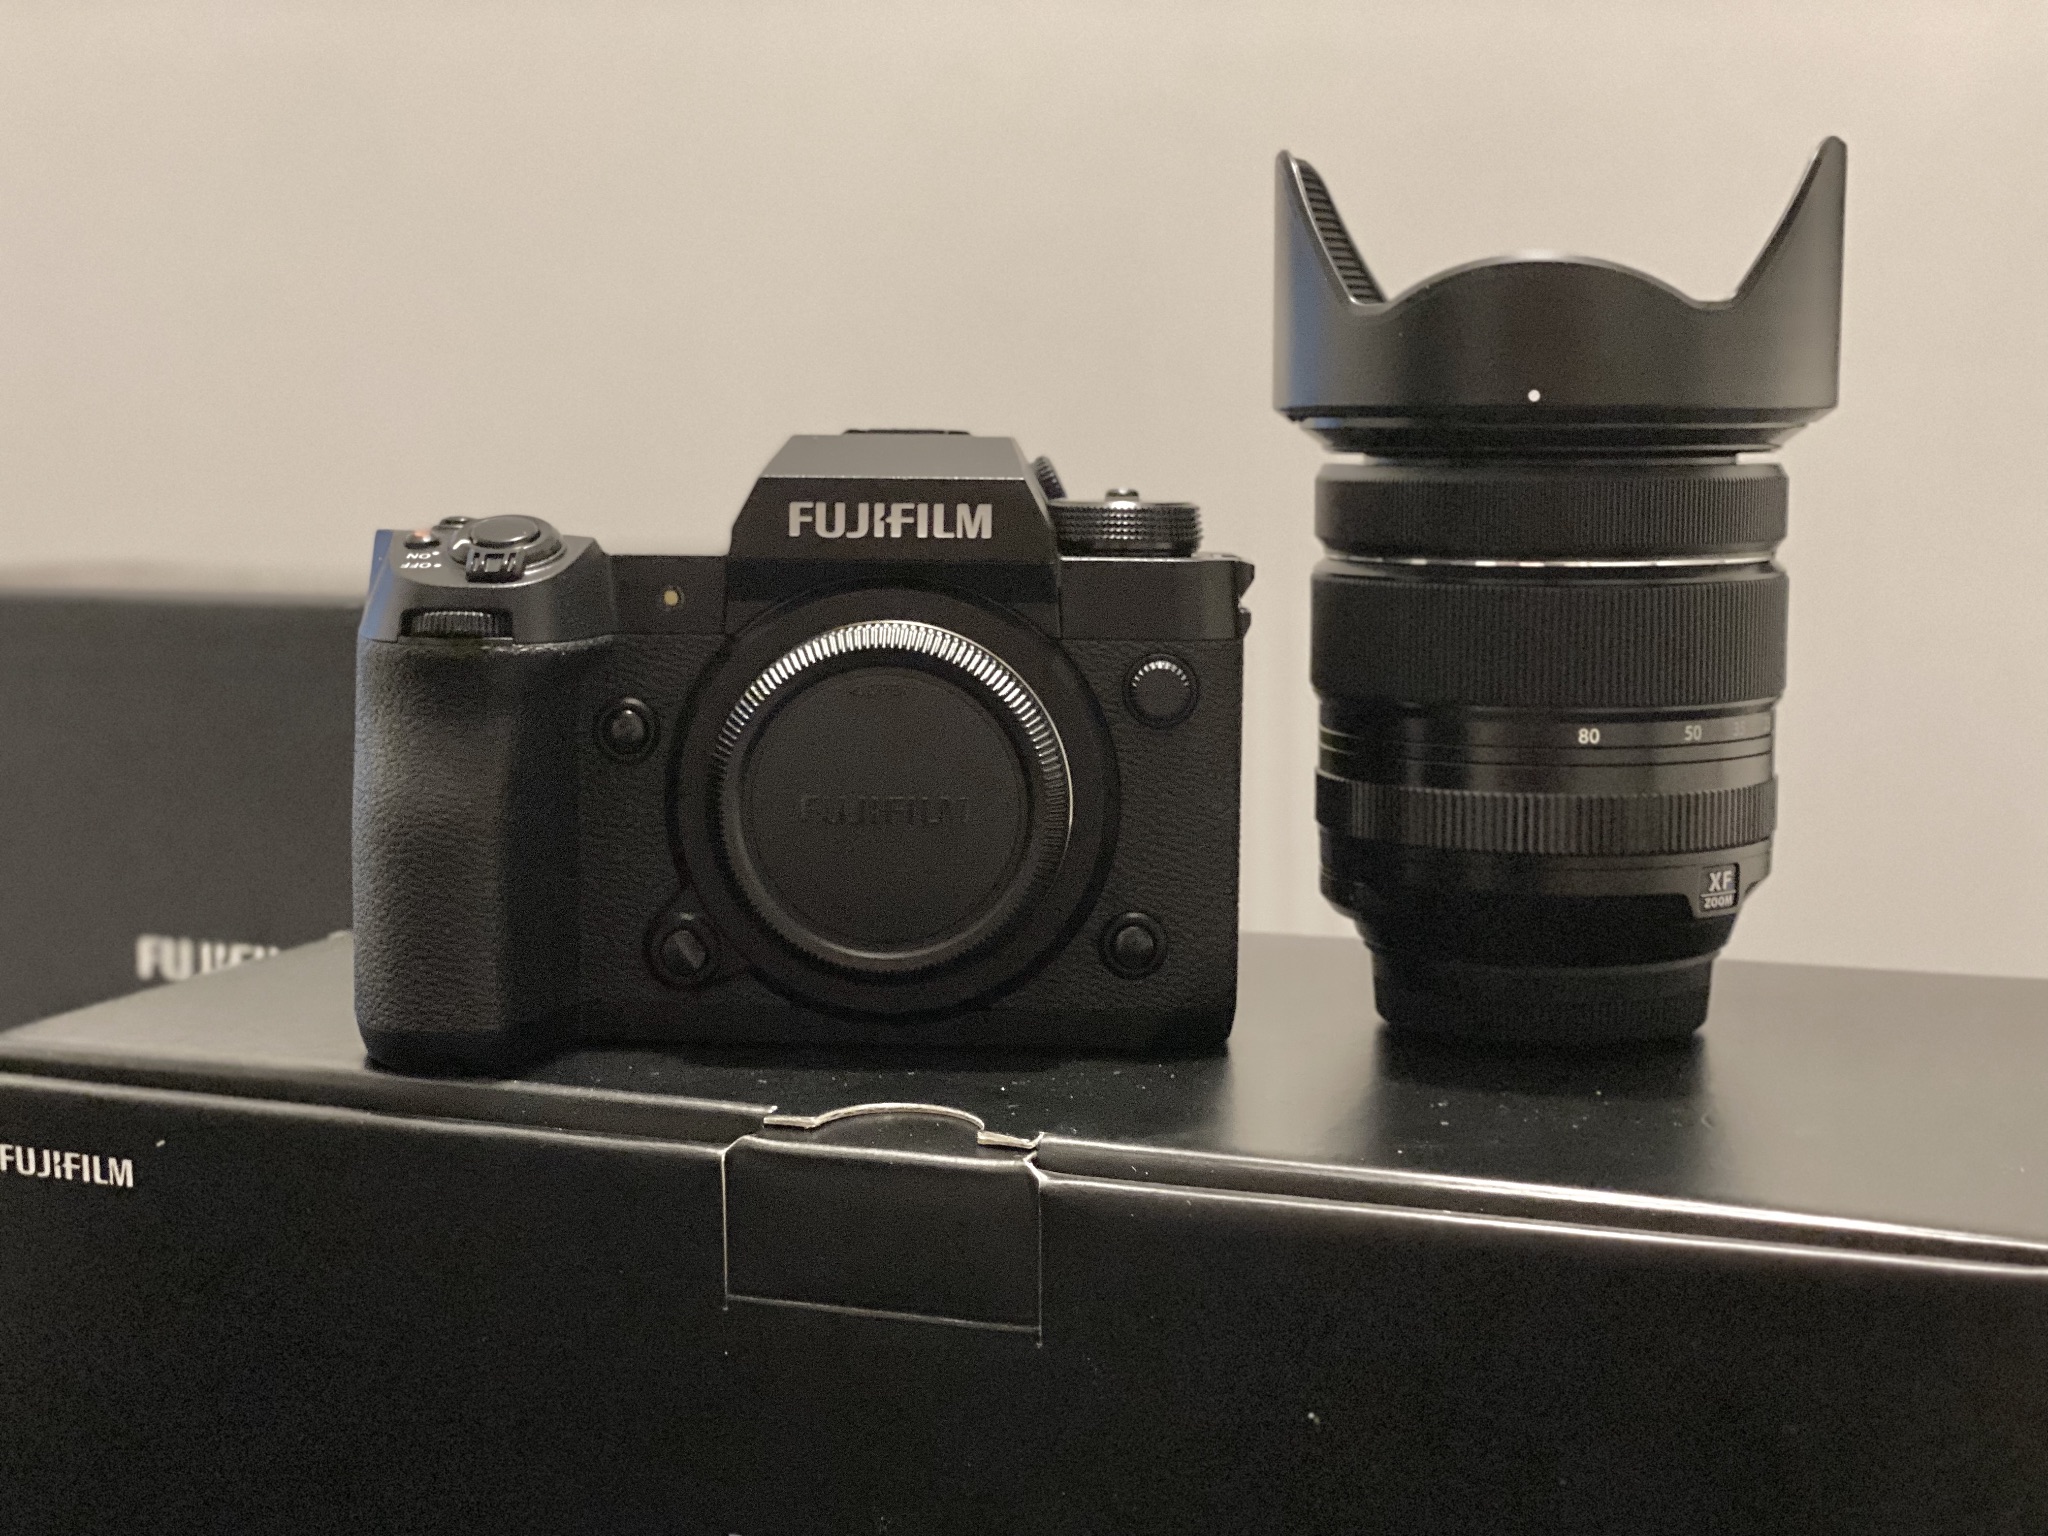 Fujifilm camera and lens on box